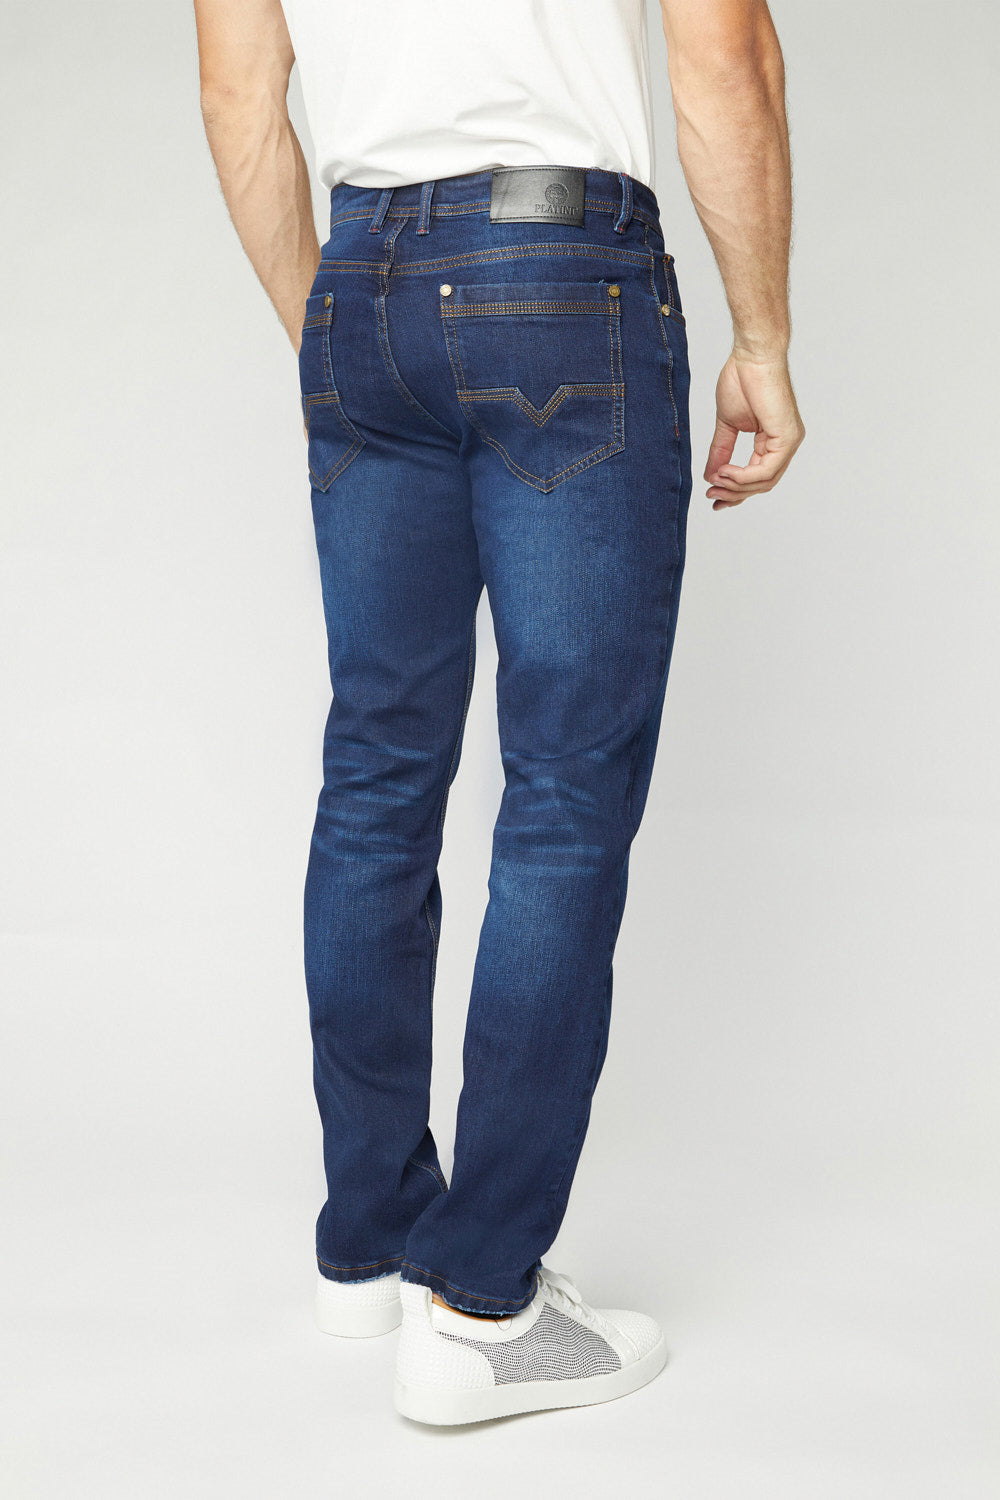 Tegenstander bellen Landgoed Pax Men's Dk Blue Slim Stretch Jeans – Platini Fashion